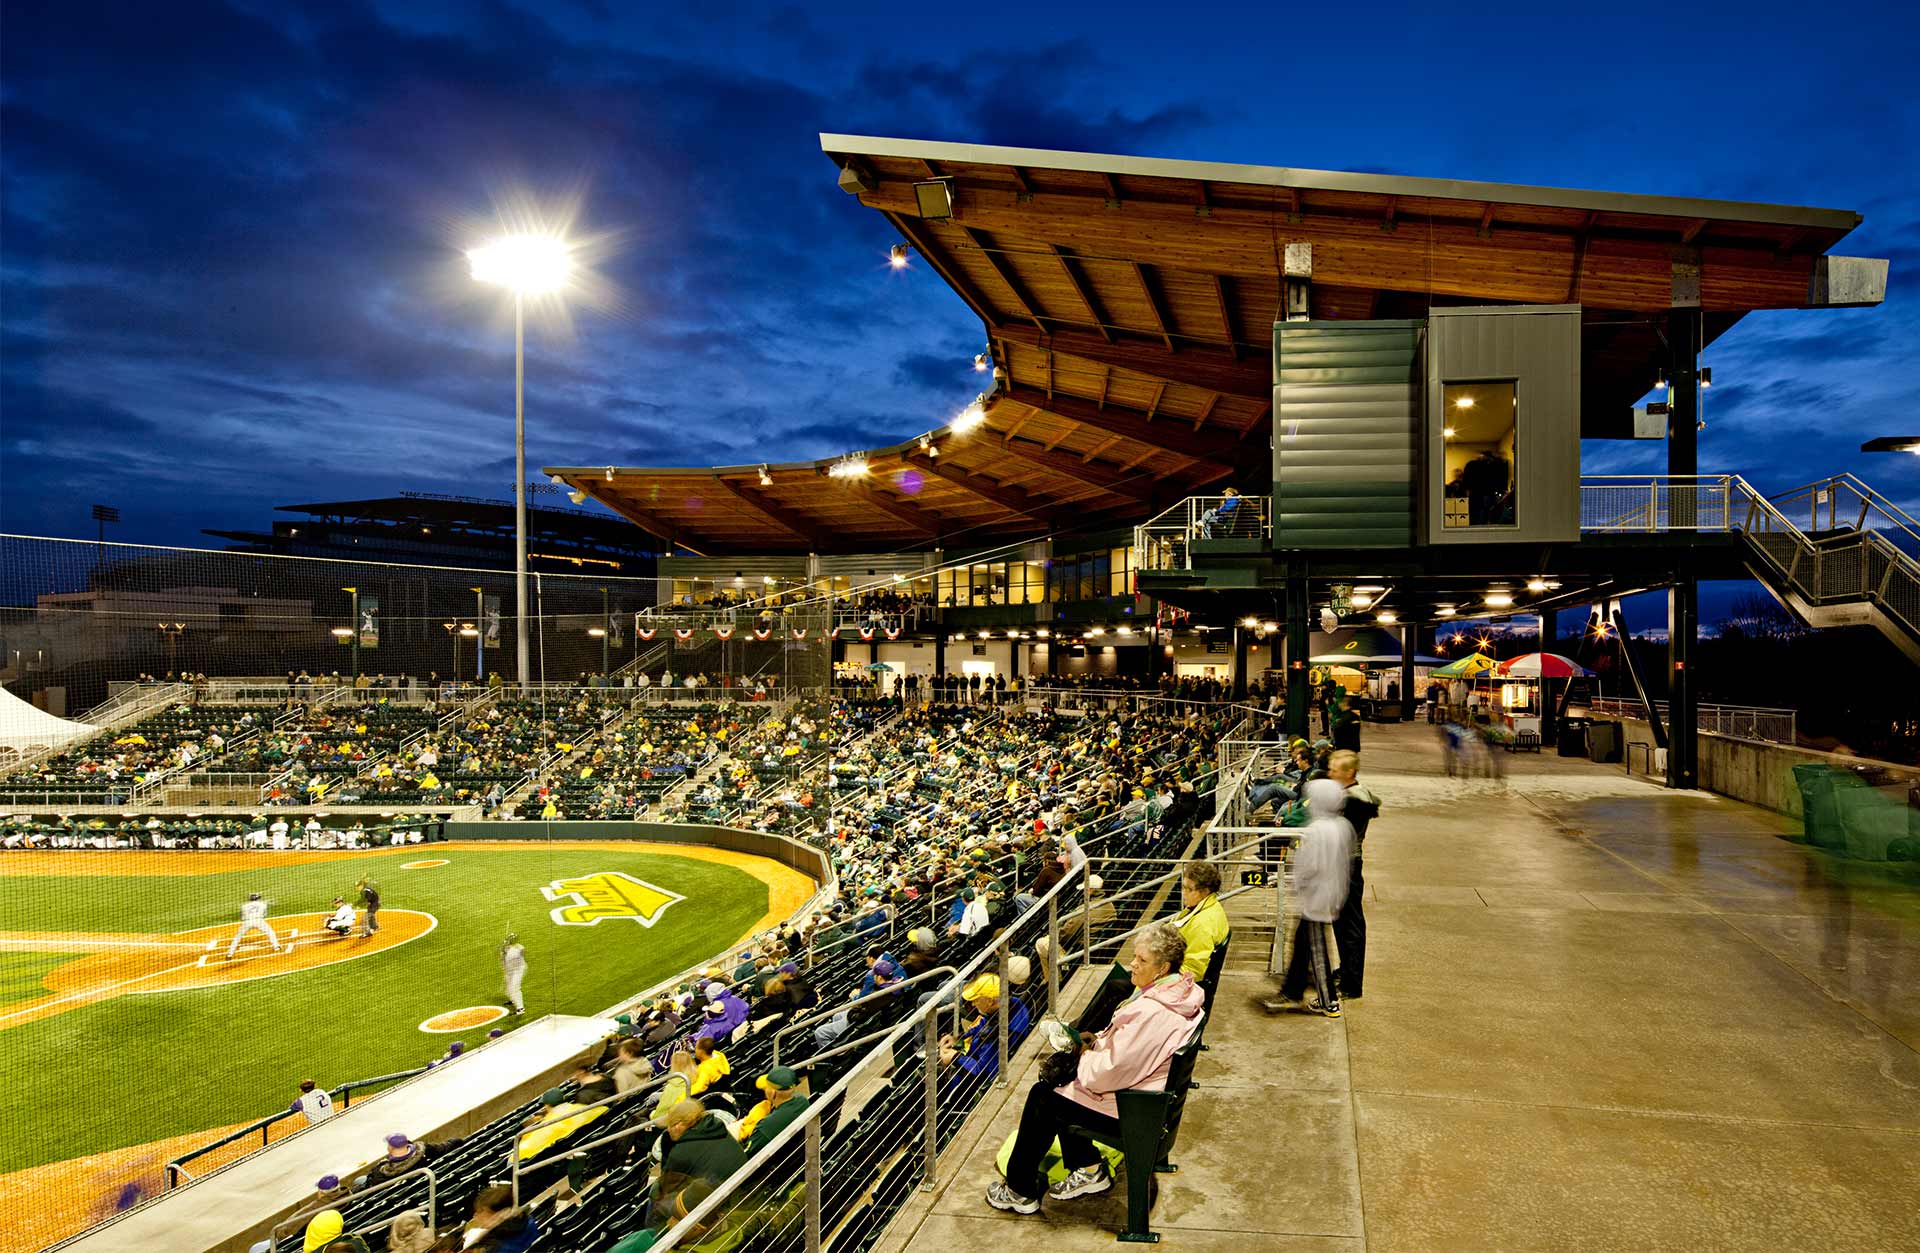 University of Oregon PK park baseball field at night with crowd